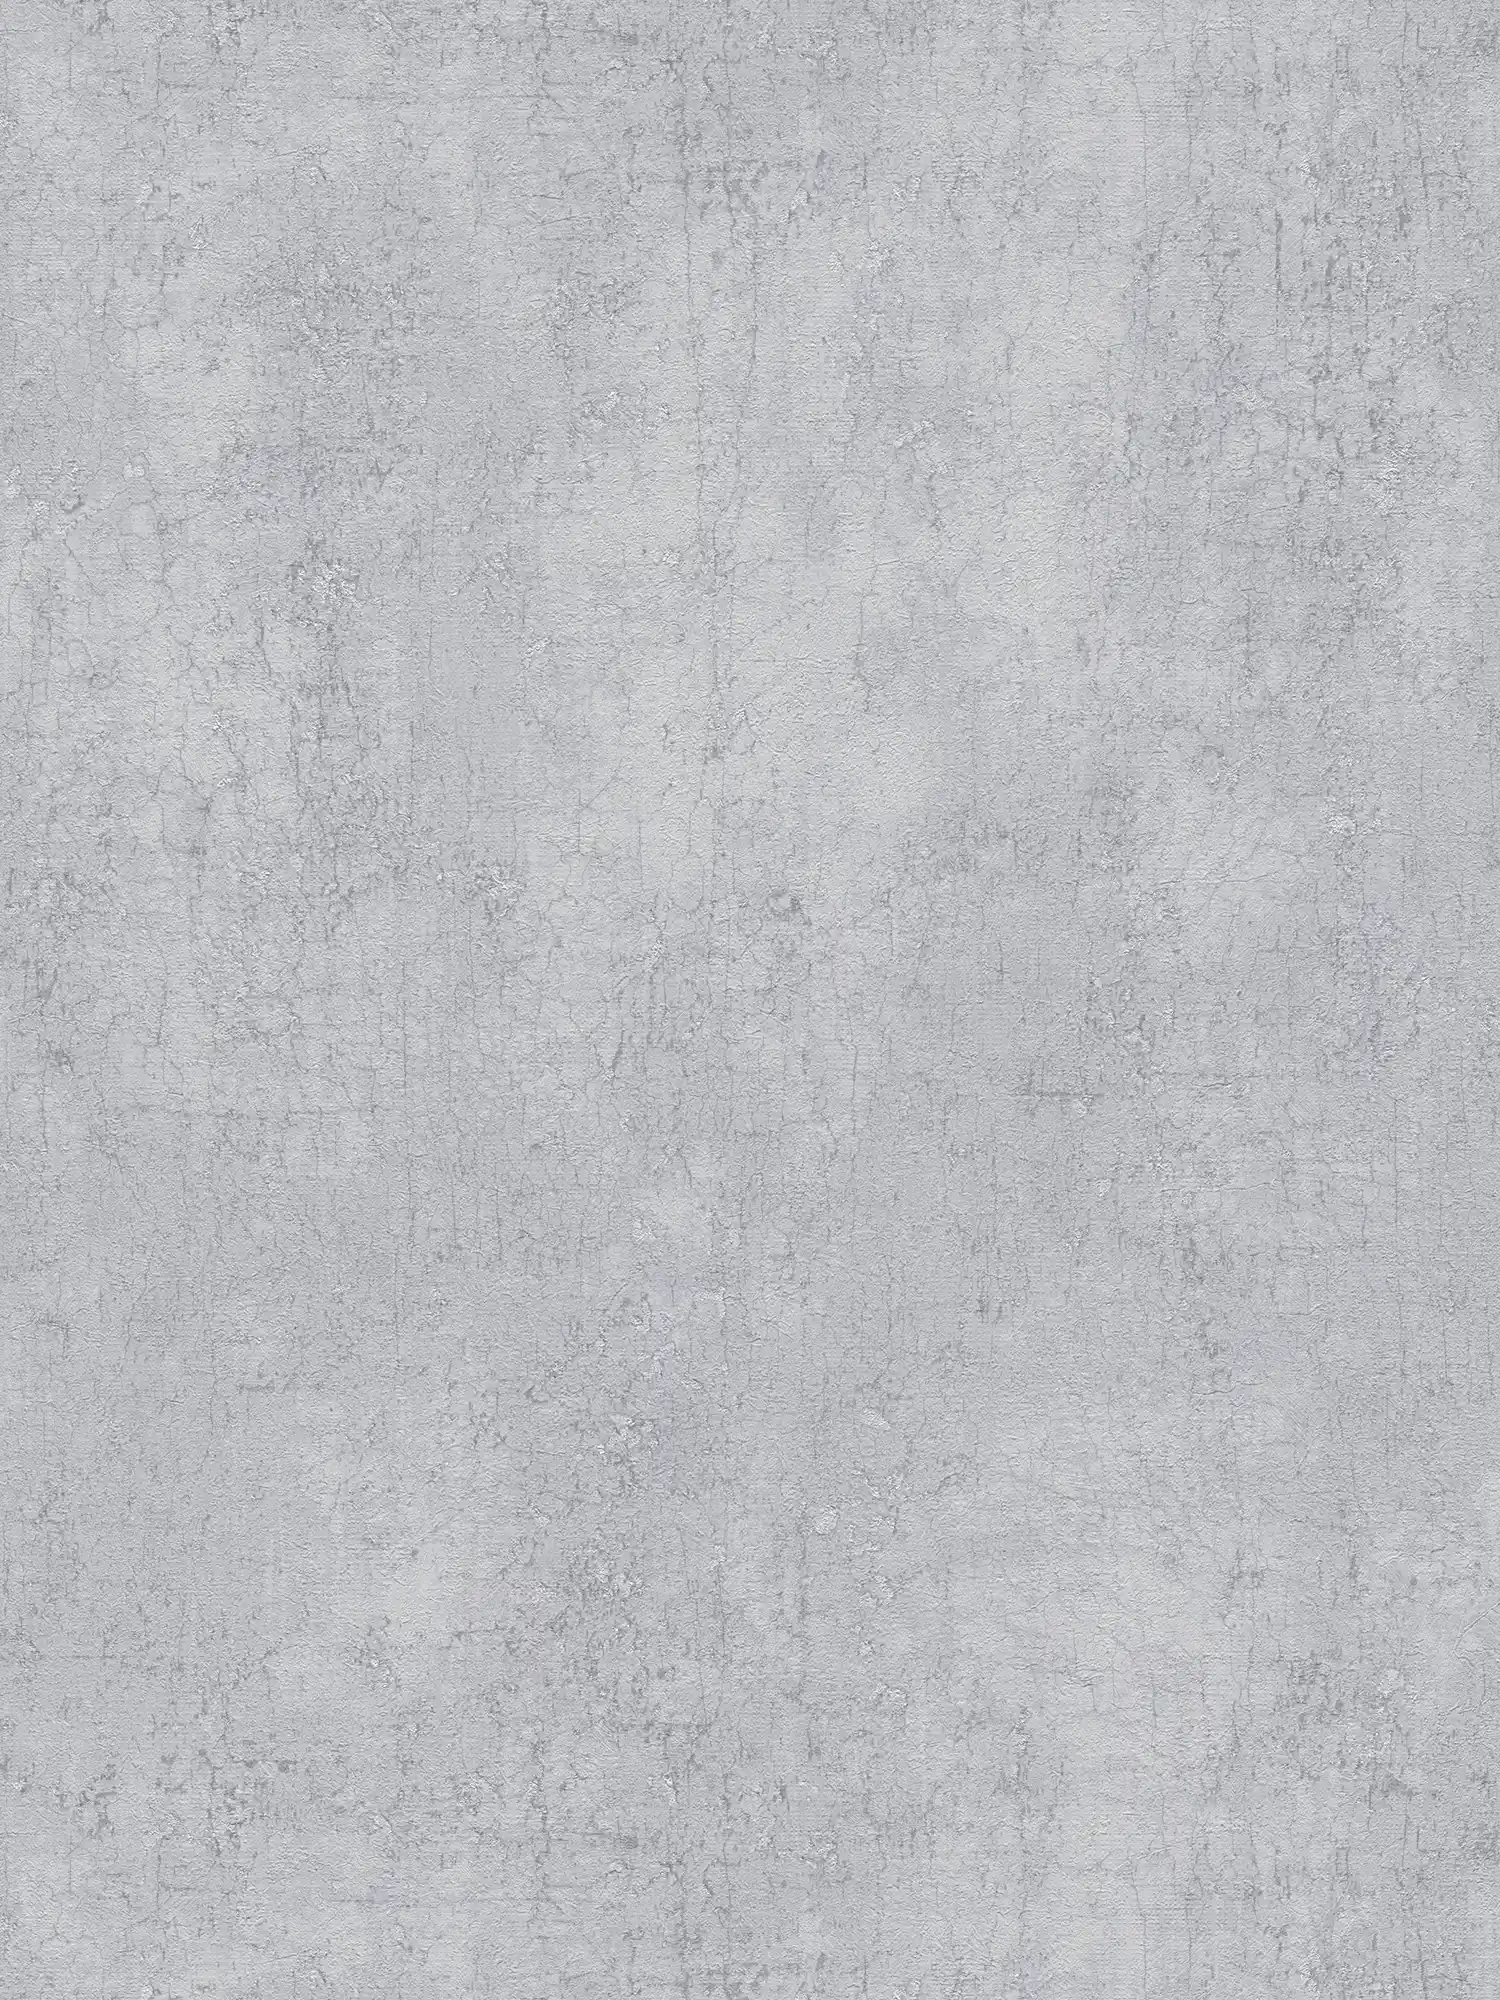 Carta da parati Plaster optic grigio pietra con accenti d'argento - grigio, metallico
